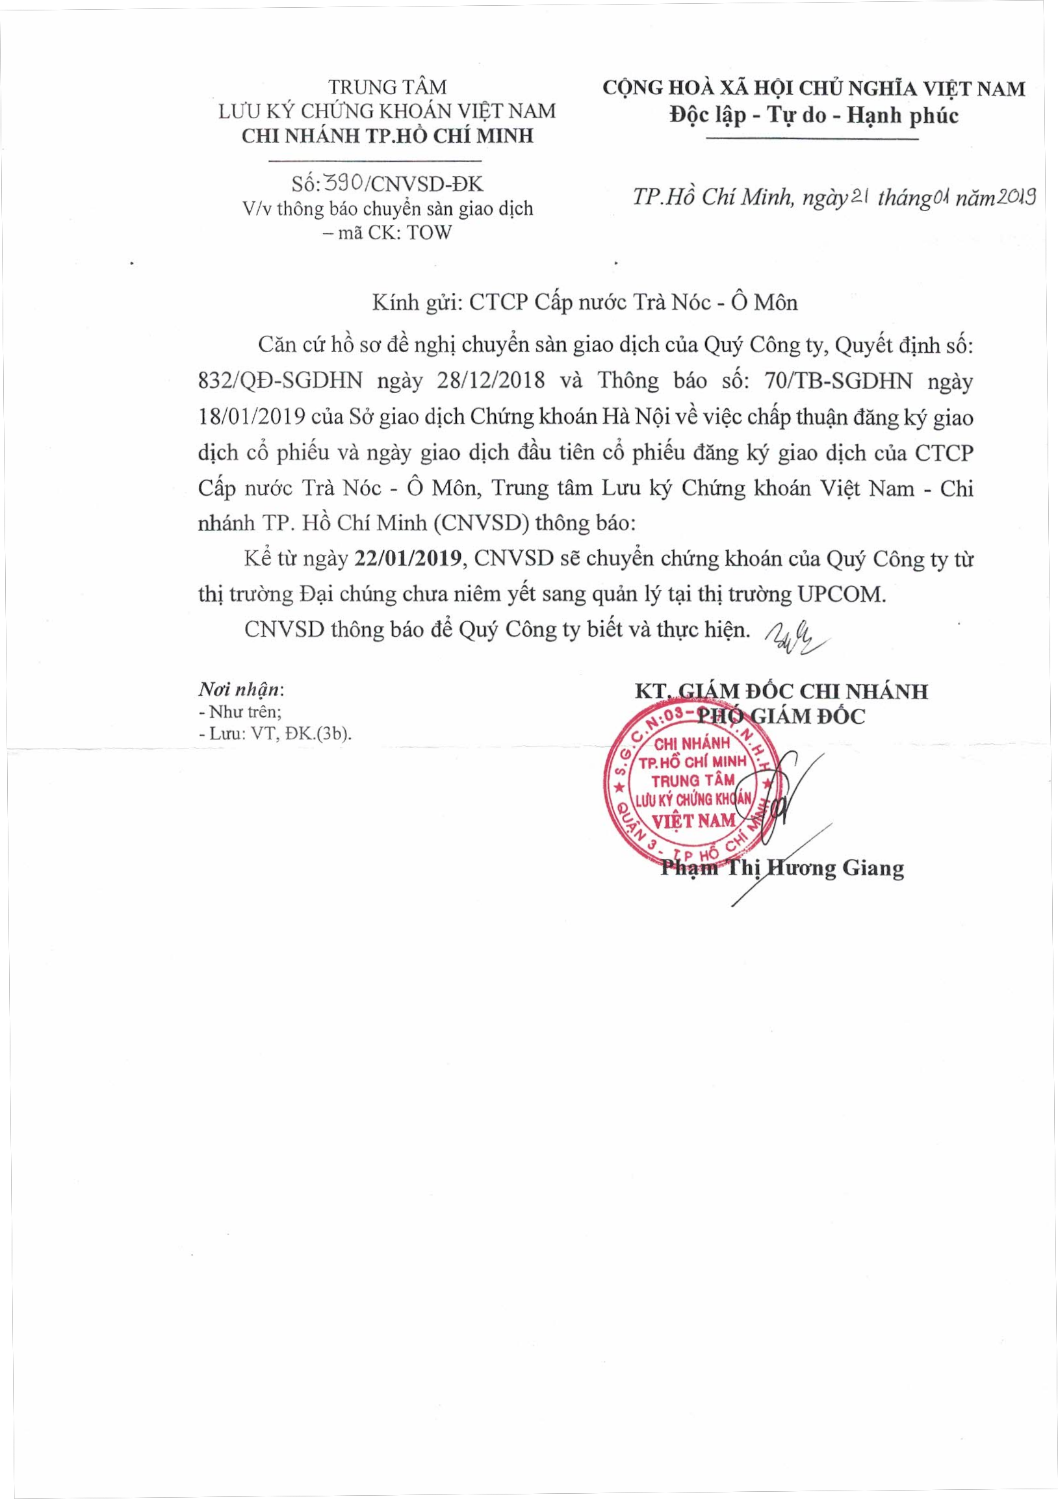 Cong van + Thong bao chuyen san VSD page2 image1